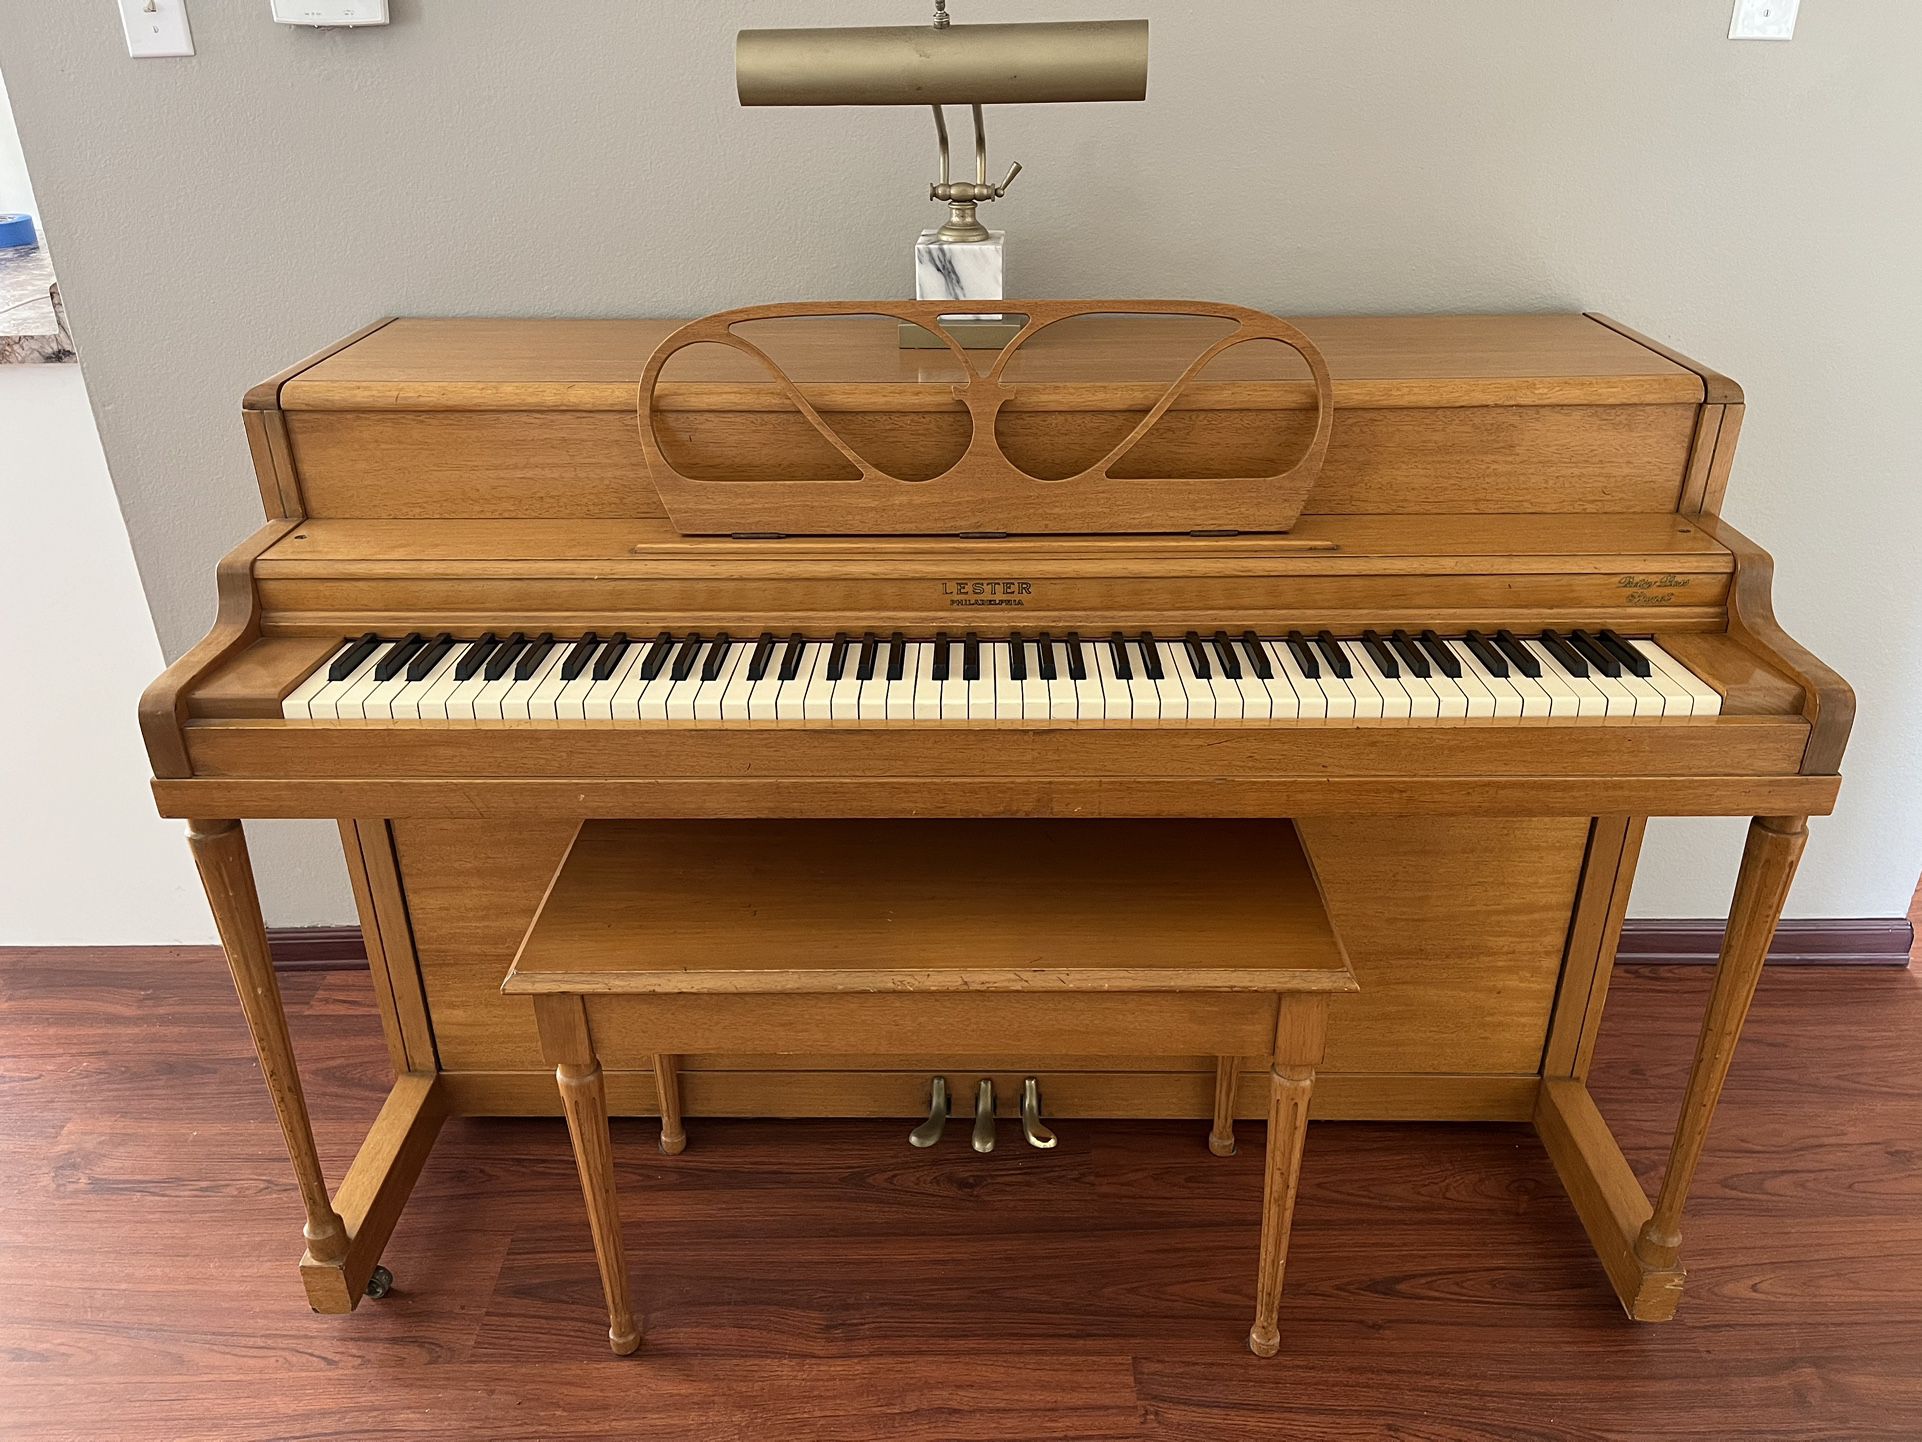 Lester Spinet Piano From Philadelphia 